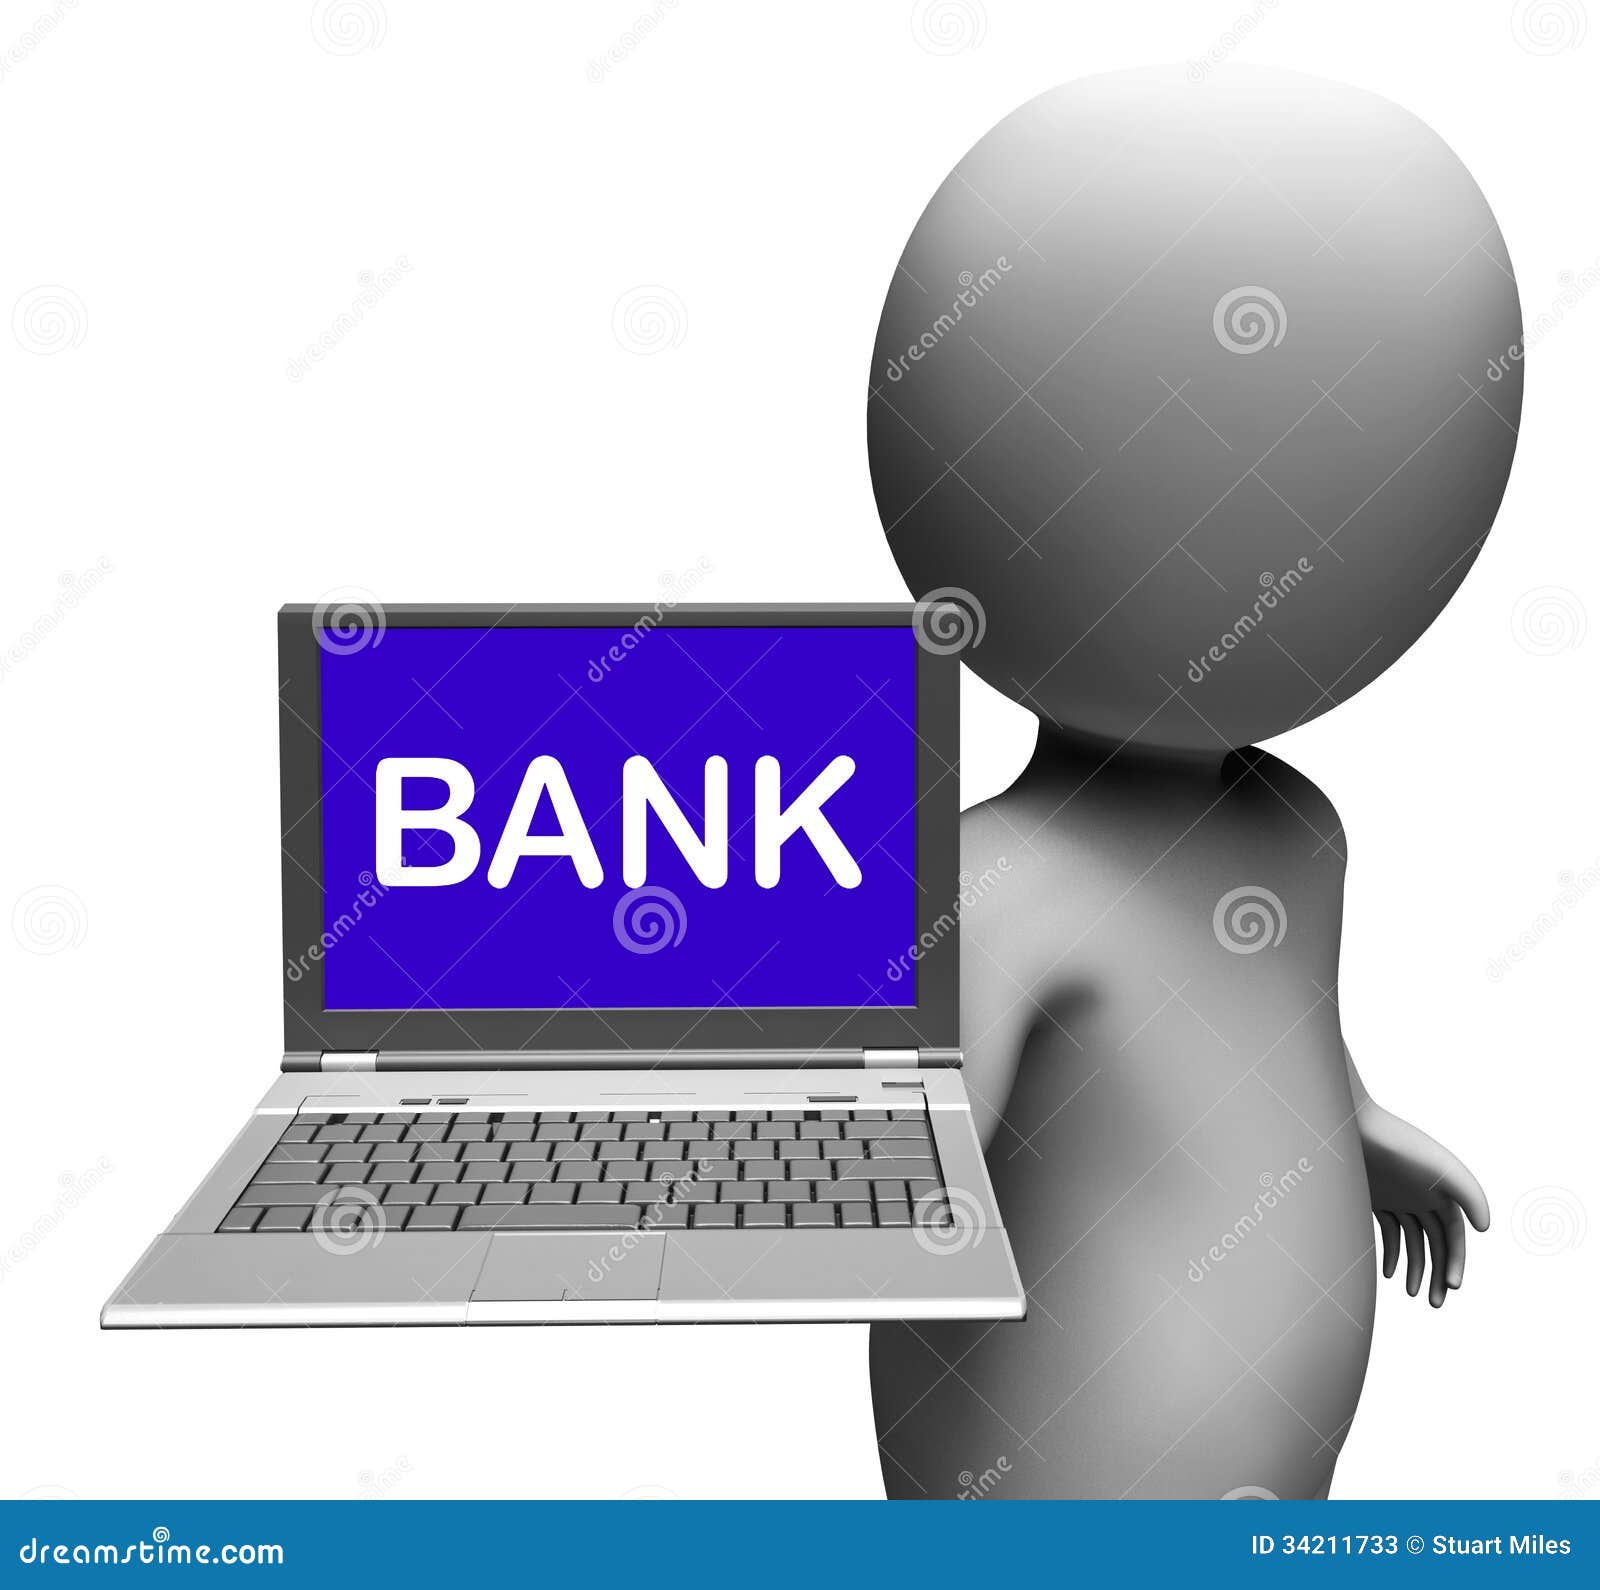 Dissertation on banking system